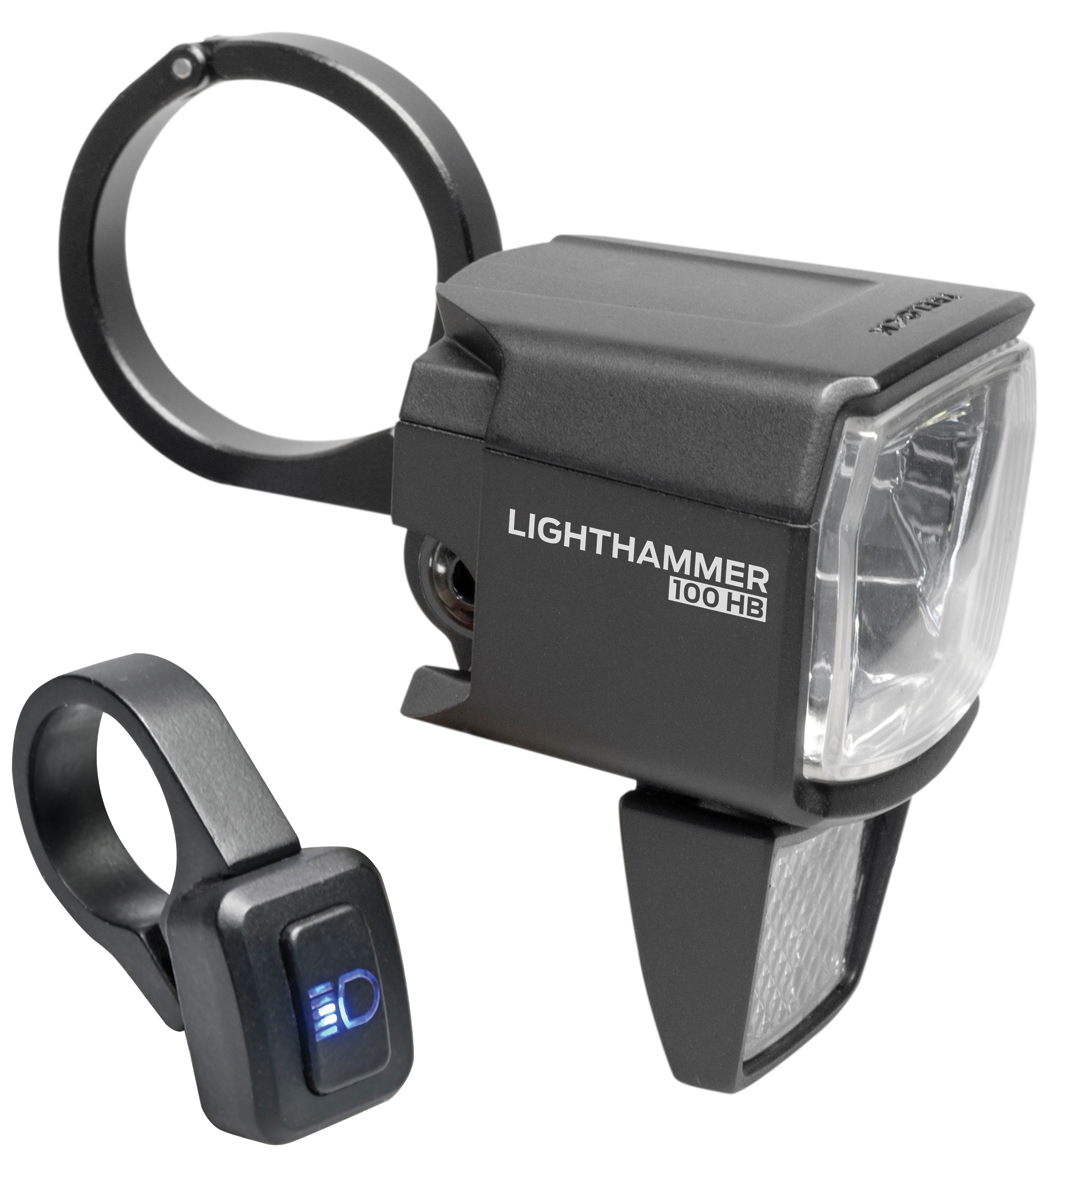 LS 890-HB LIGHTHAMMER